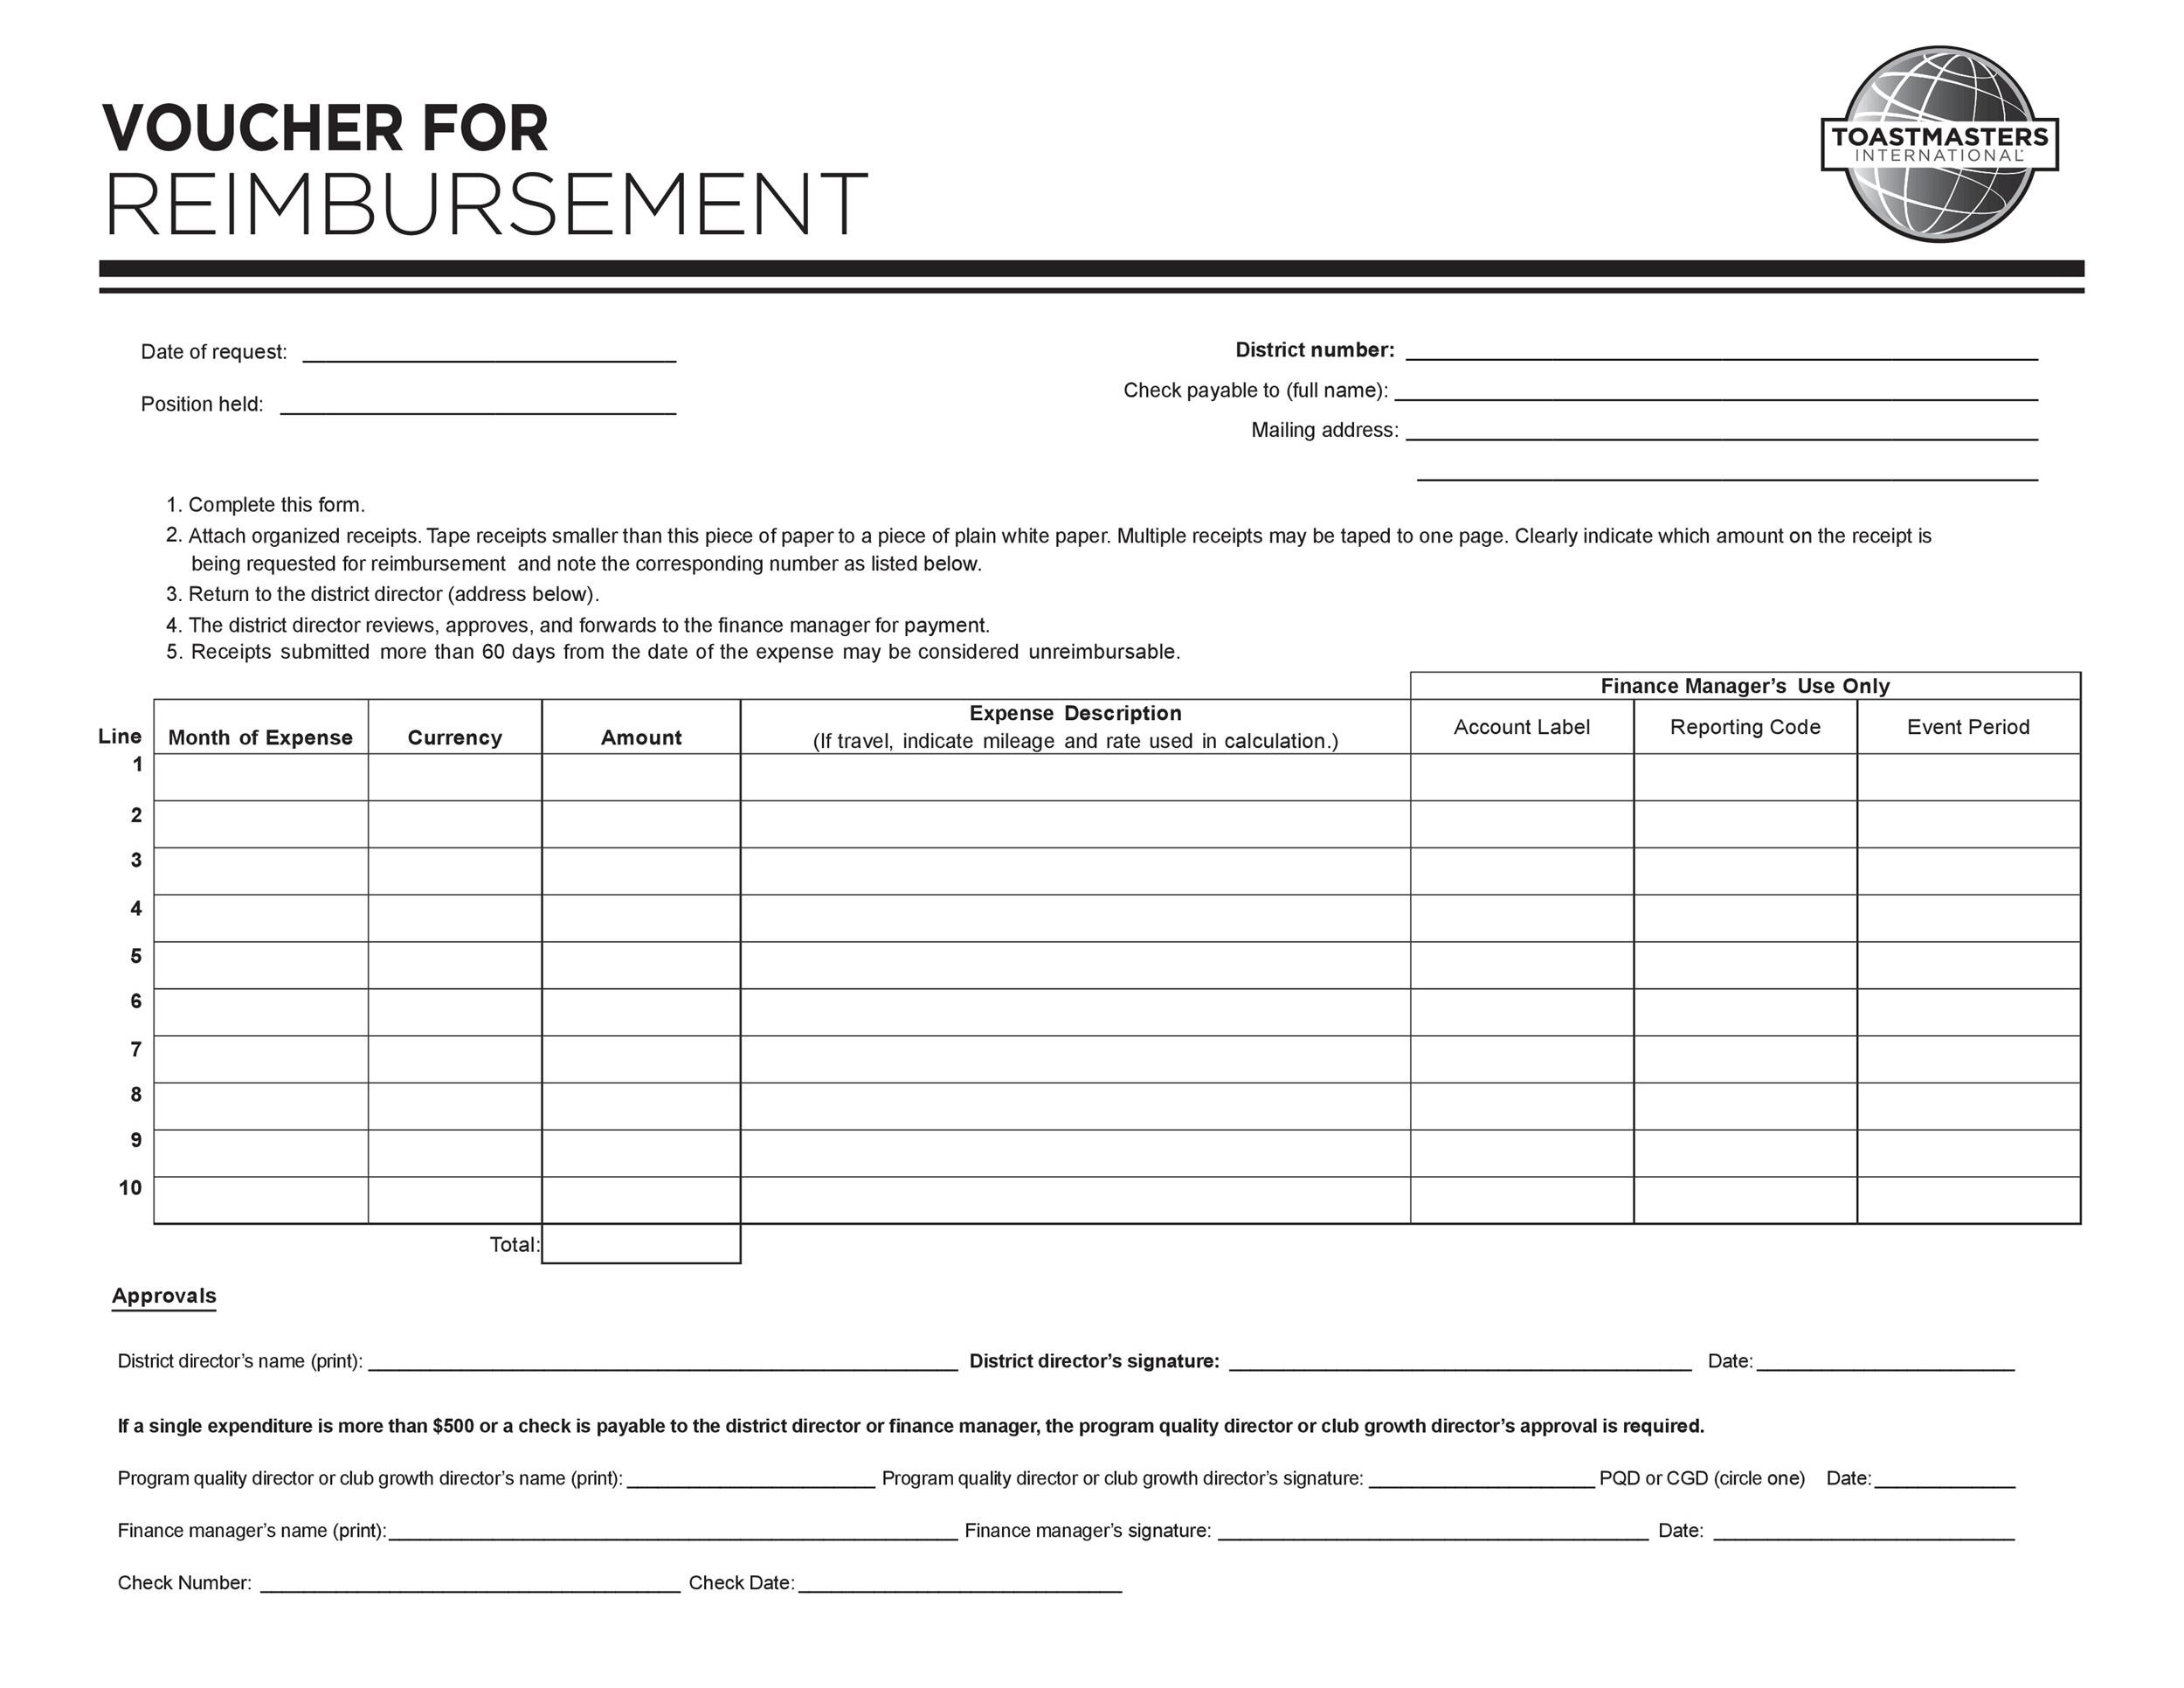 47-reimbursement-form-templates-mileage-expense-vsp